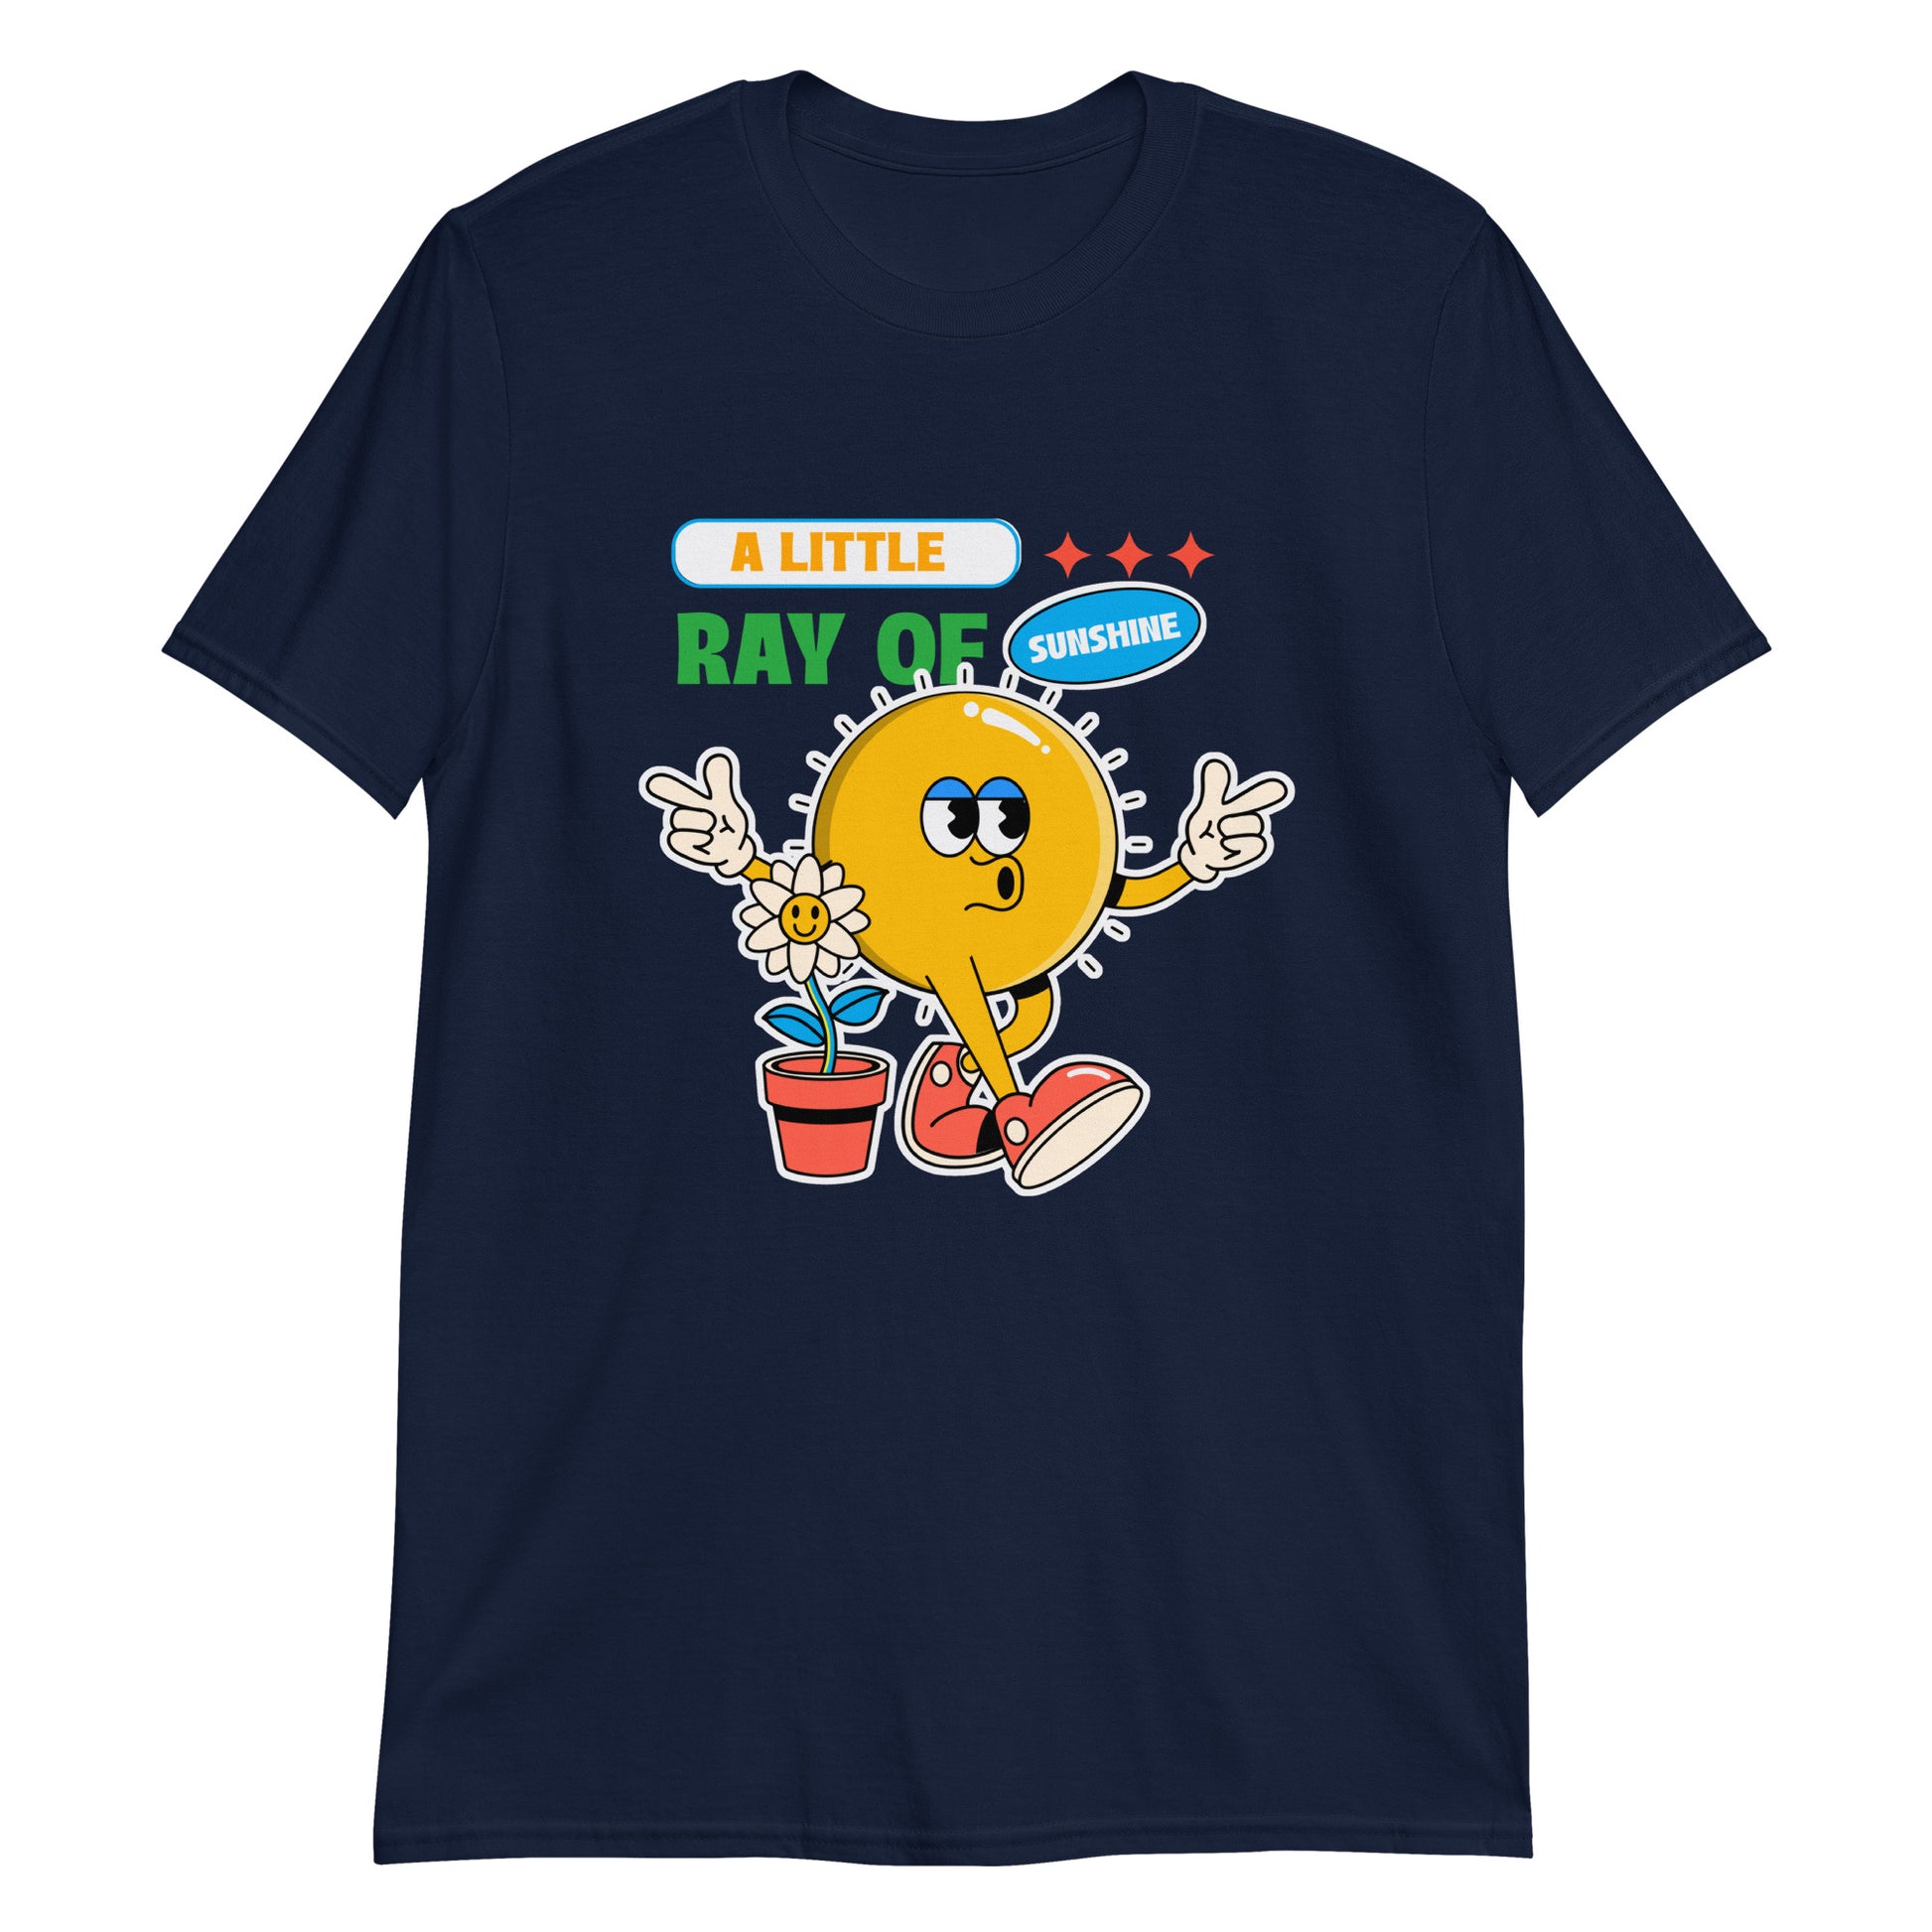 A Little Ray Of Sunshine - Short-Sleeve Unisex T-Shirt Navy Unisex T-shirt Positivity Summer